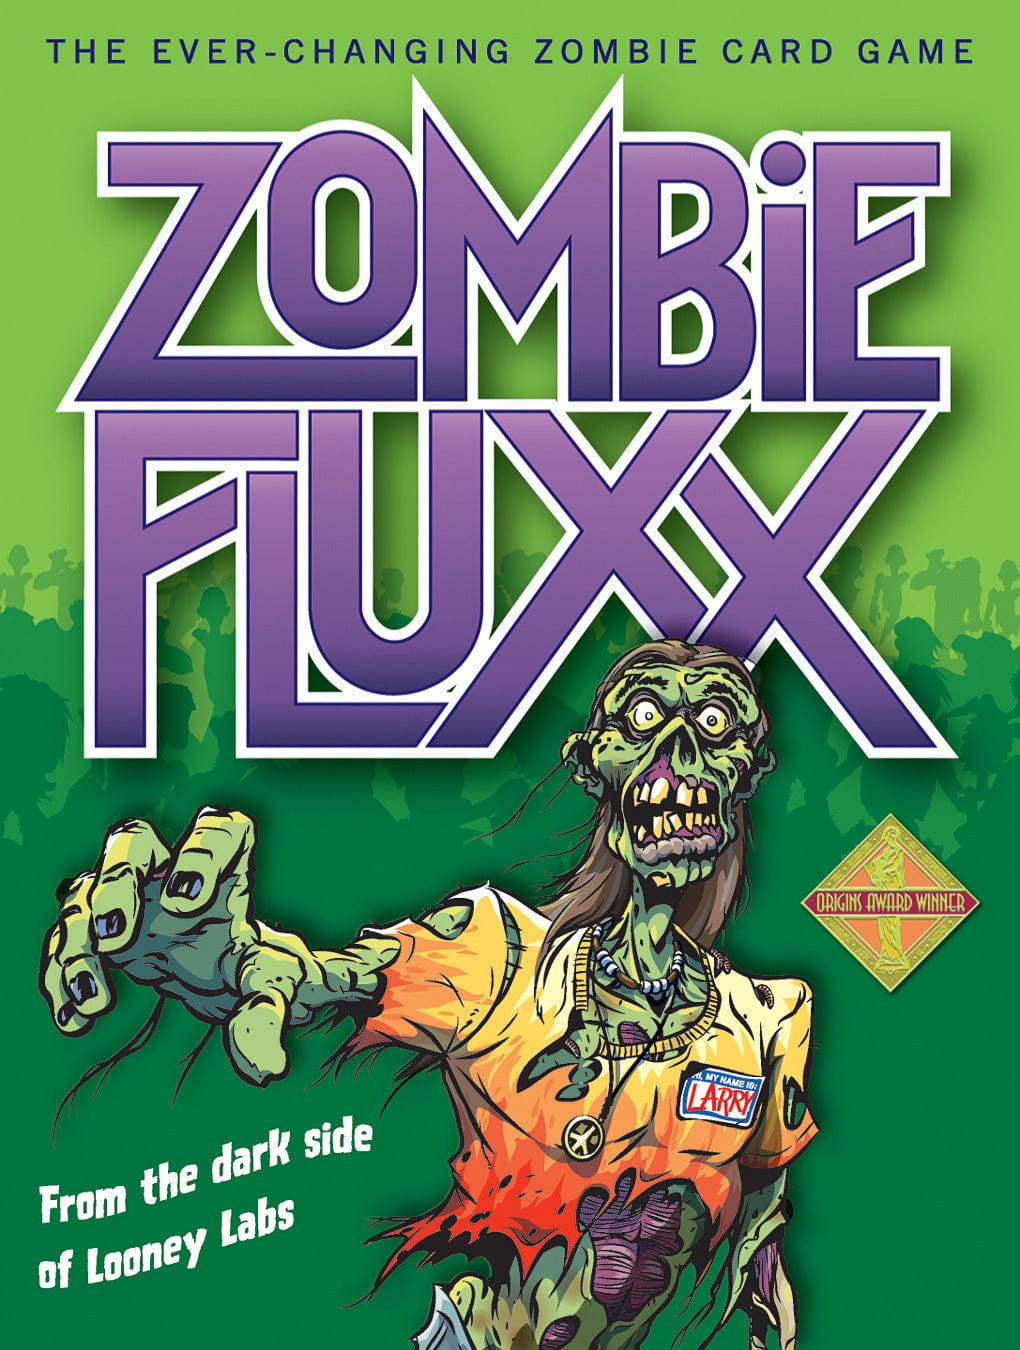 Zombie Fluxx - Saltire Games